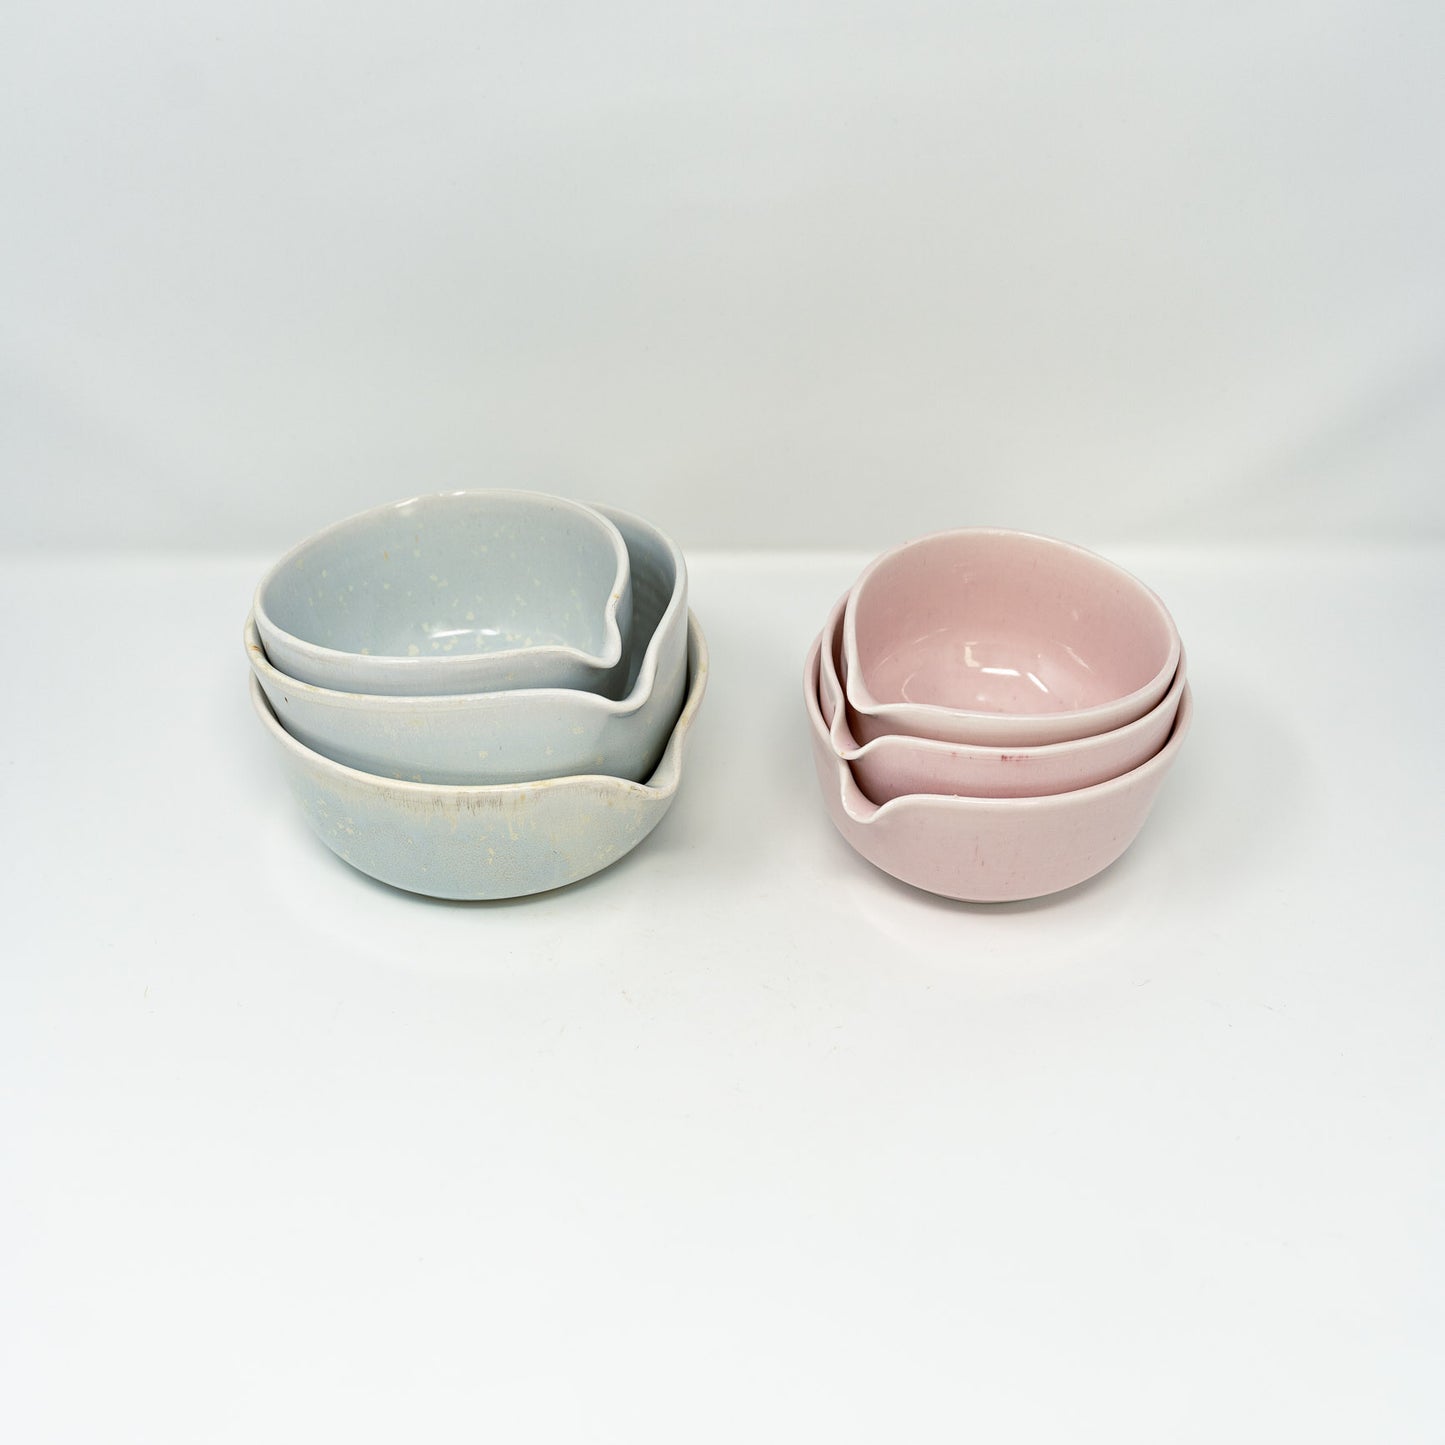 Porcelain matcha bowl